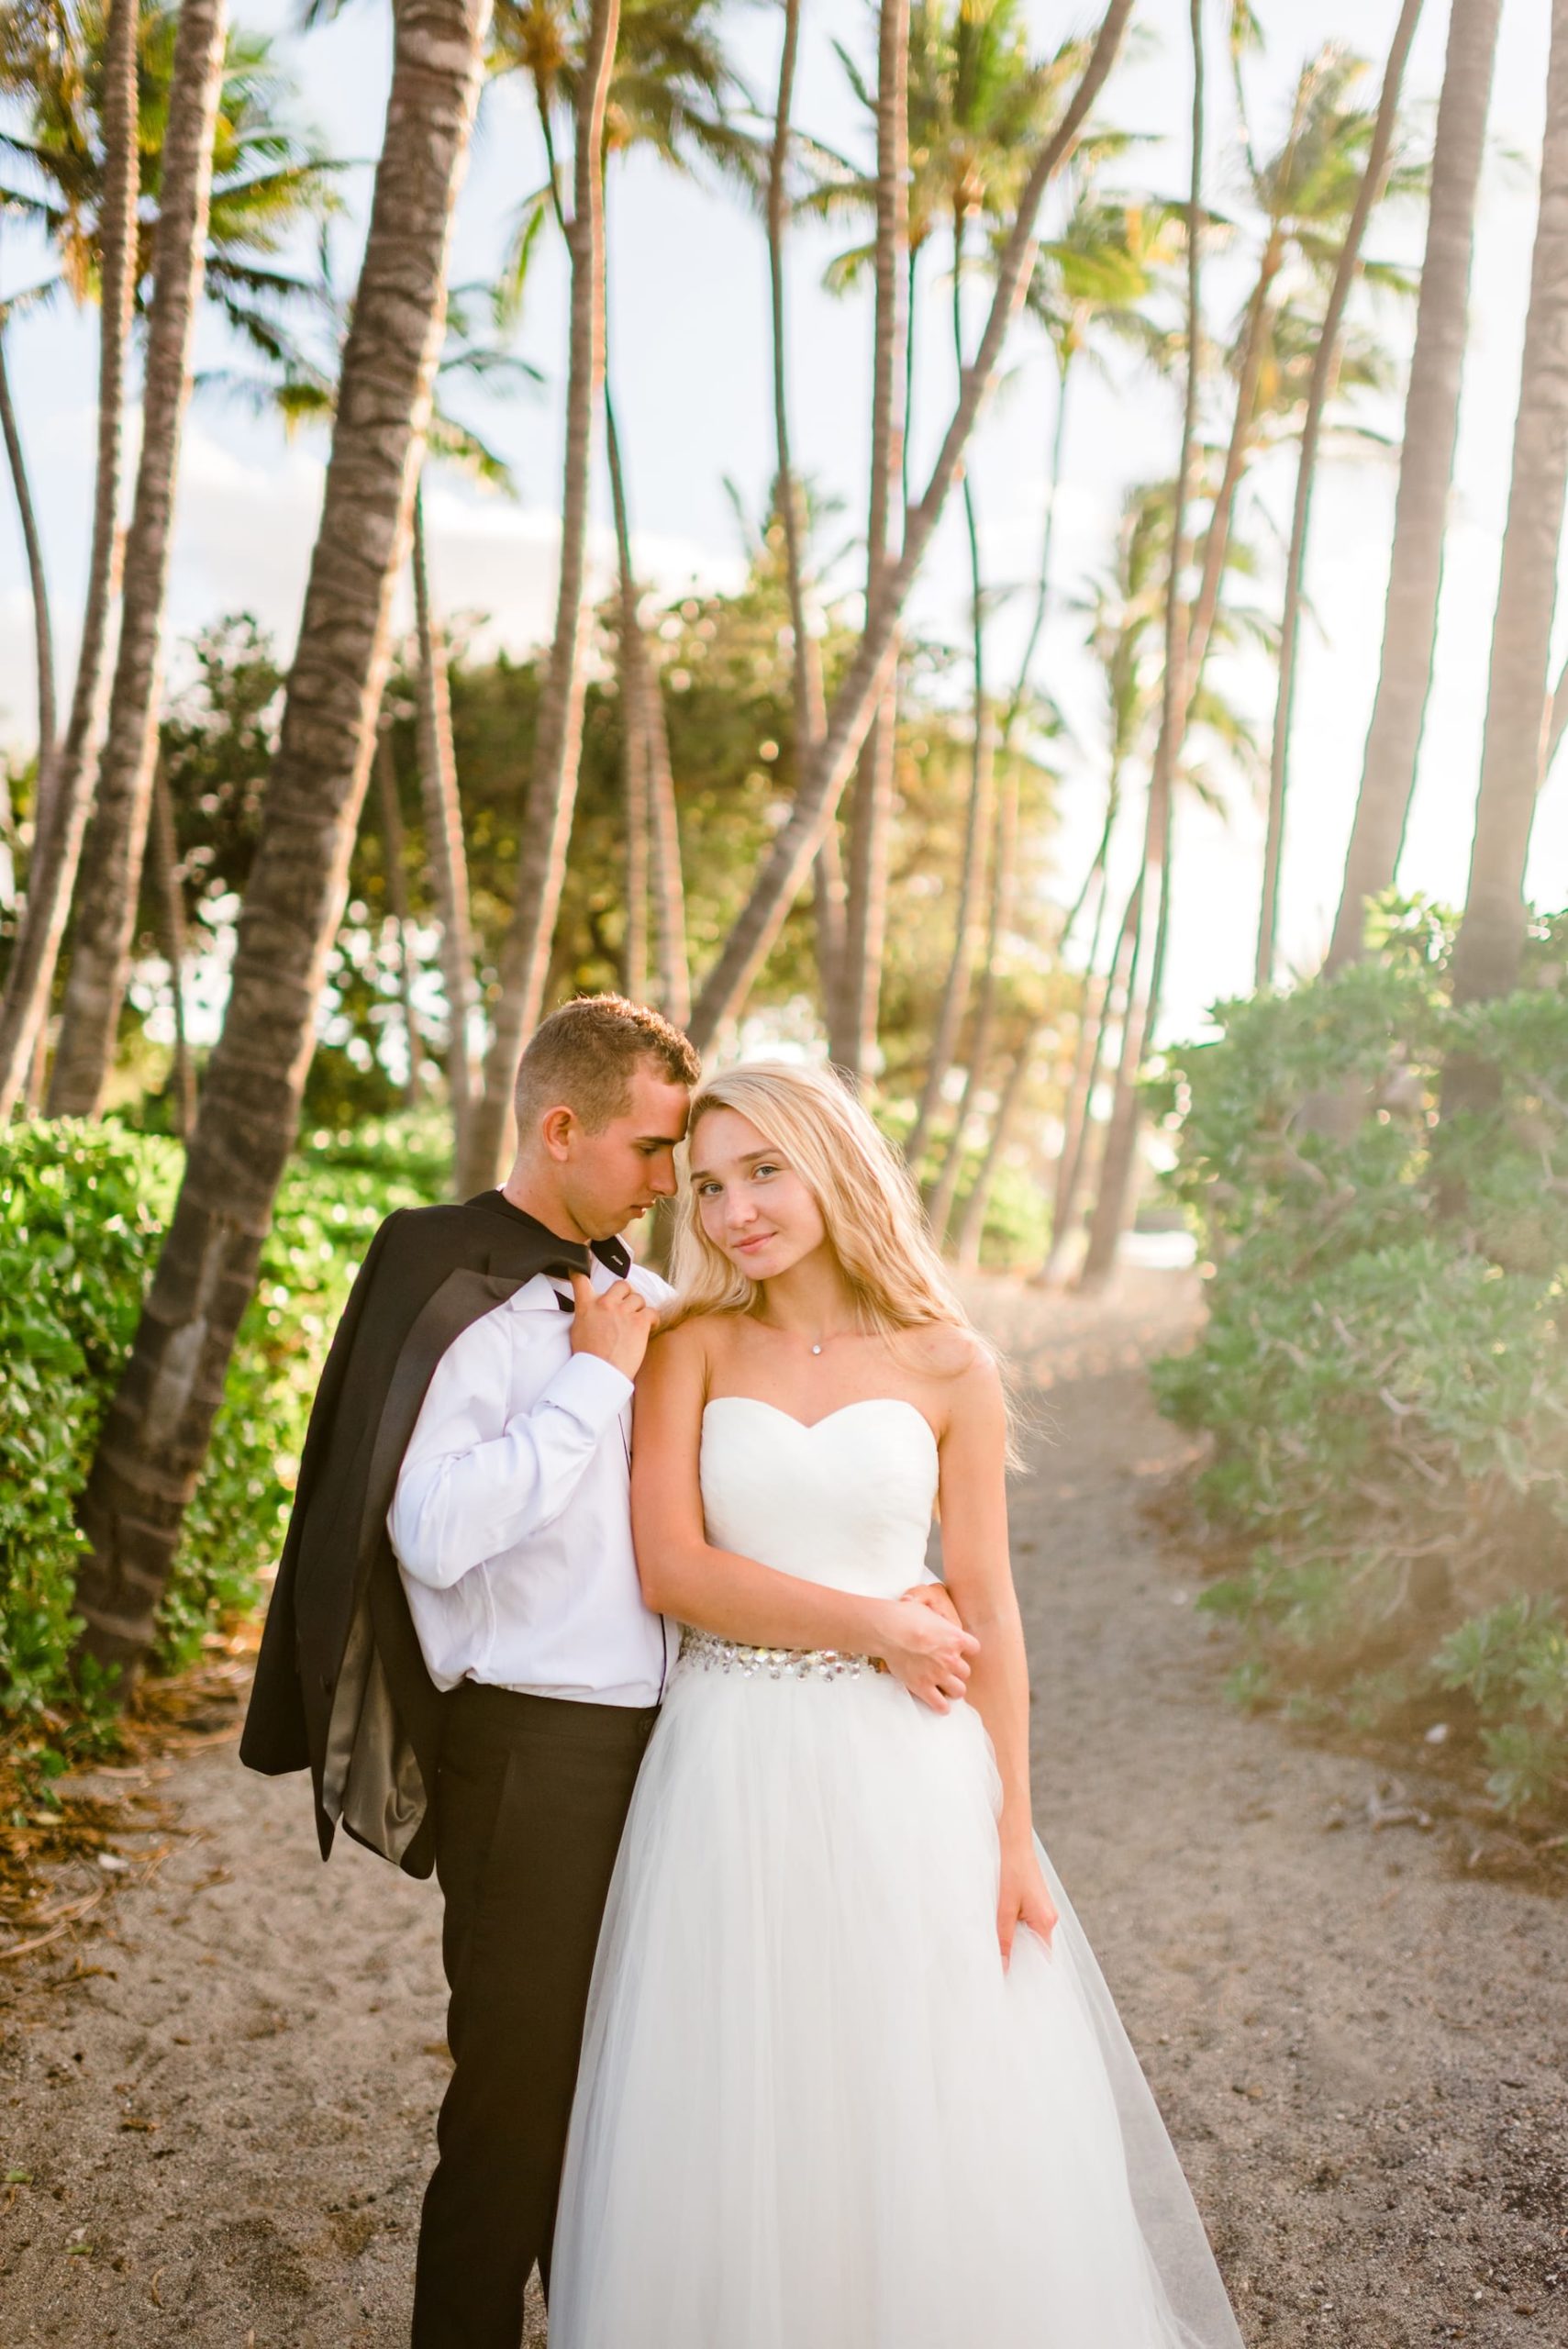 Big-Island-Elopement-Private-Wedding-Hawaii-Beach-03.jpg